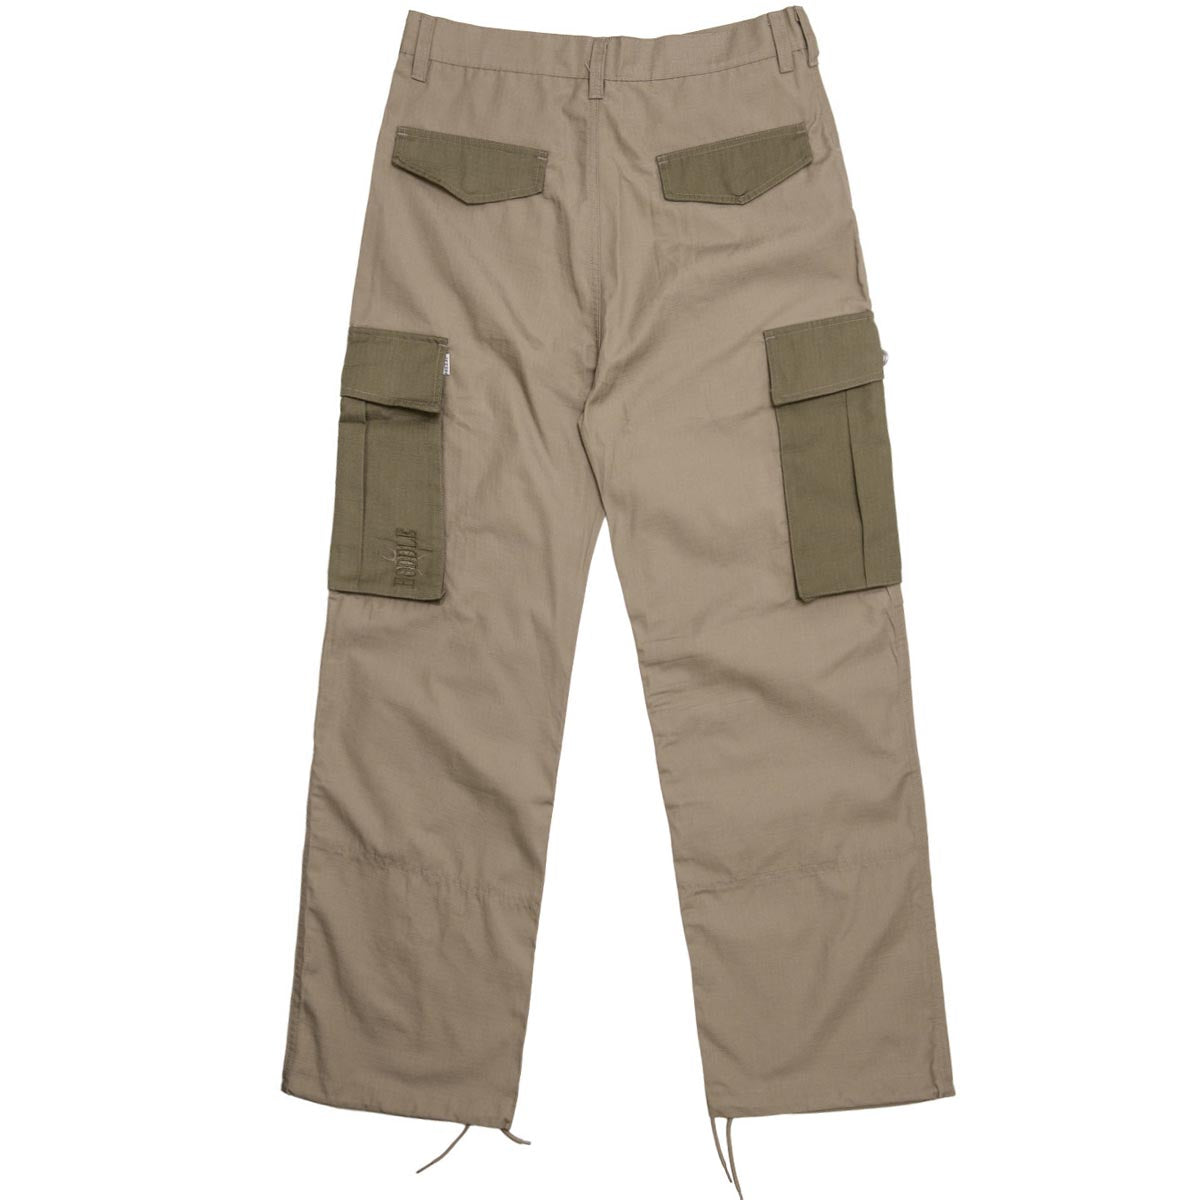 Hoddle Pleated Rip Stop Cargo Pants - Tan/Khaki image 2